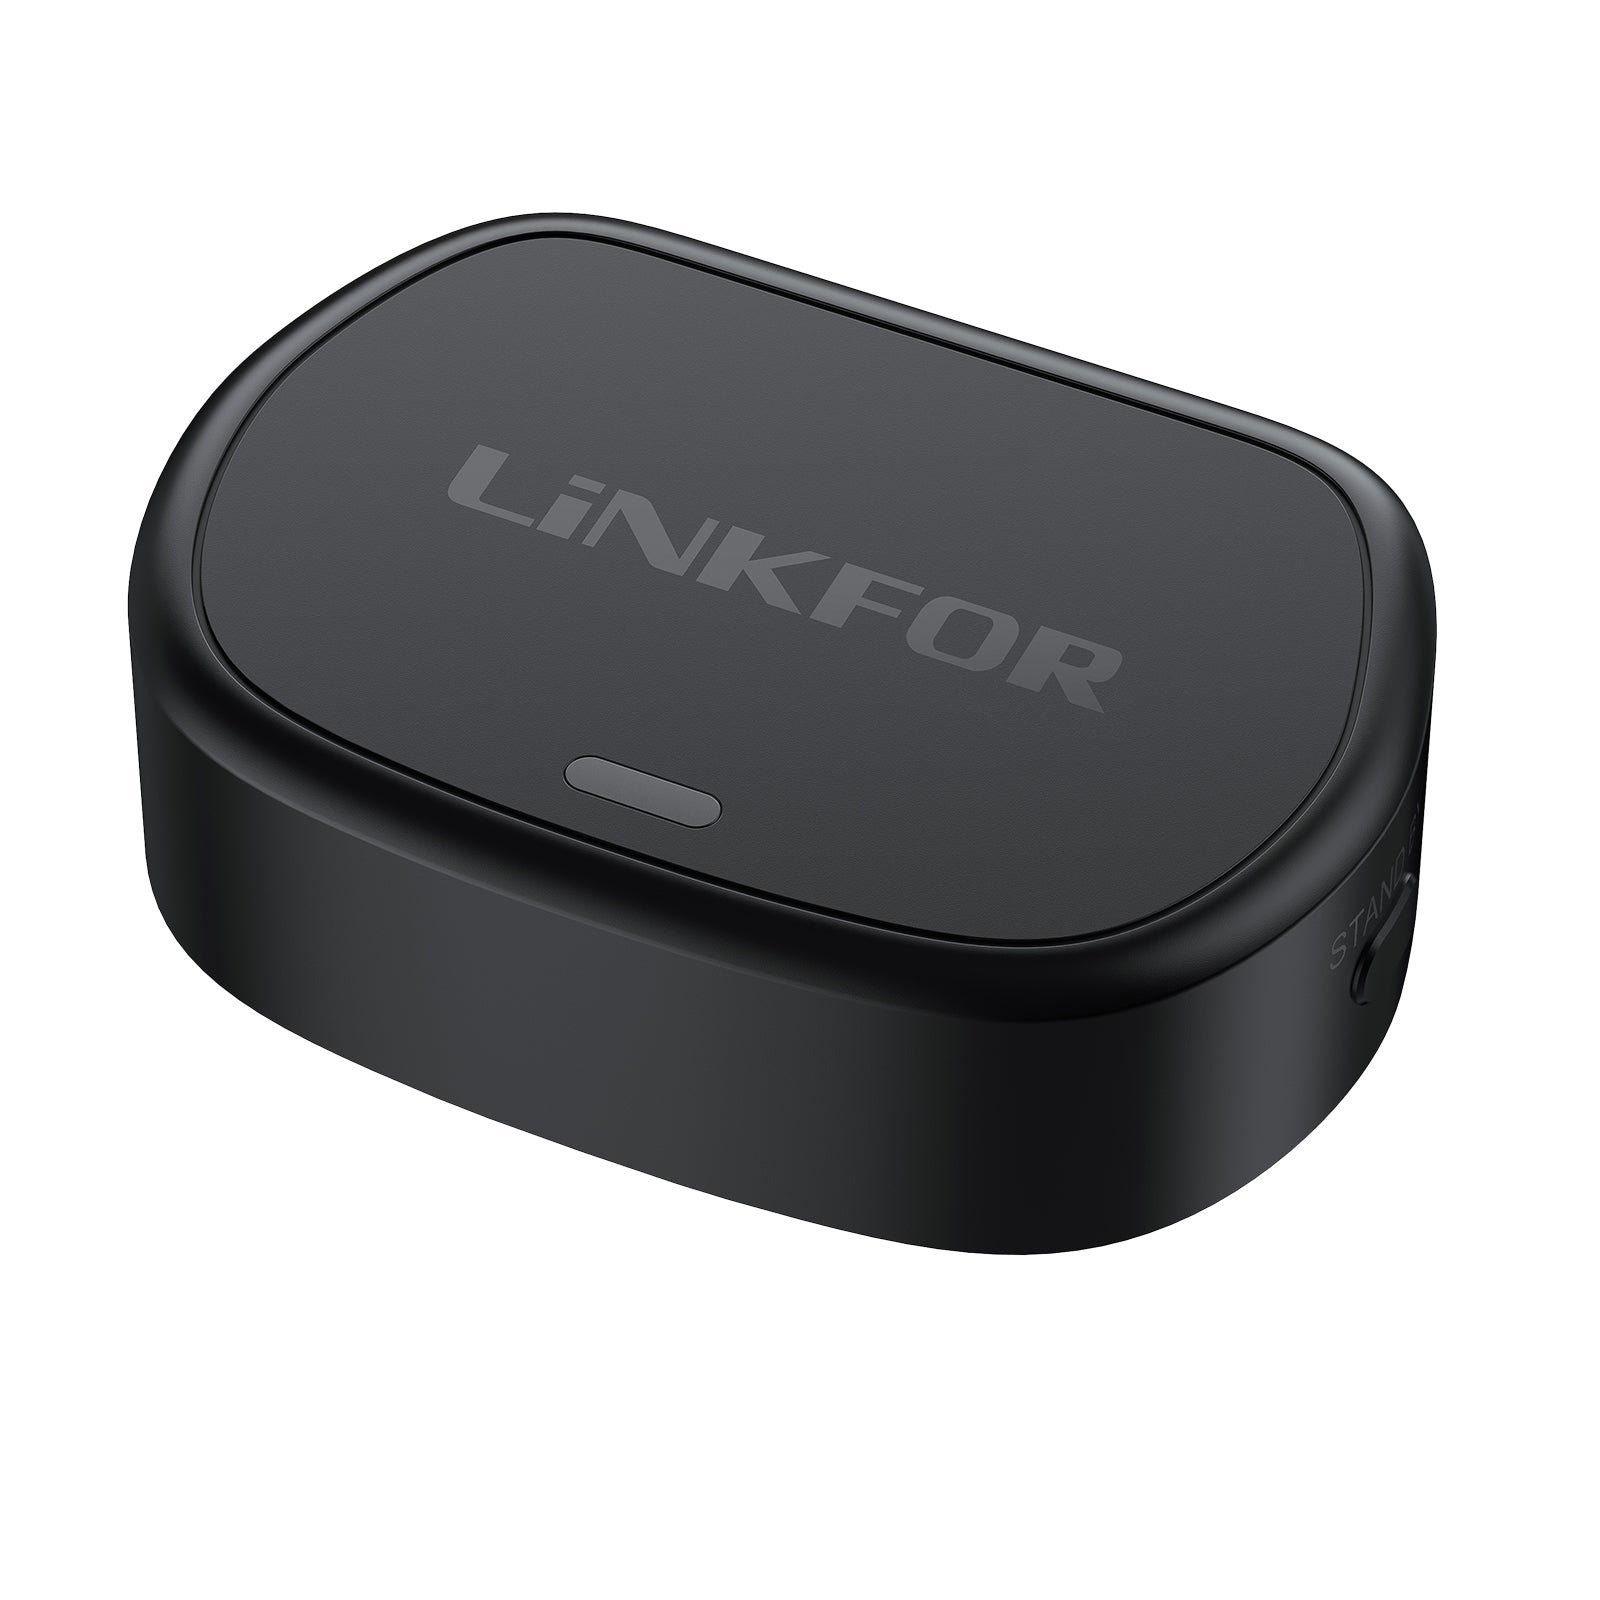 LiNKFOR 2.4G Wireless Headphones for TV